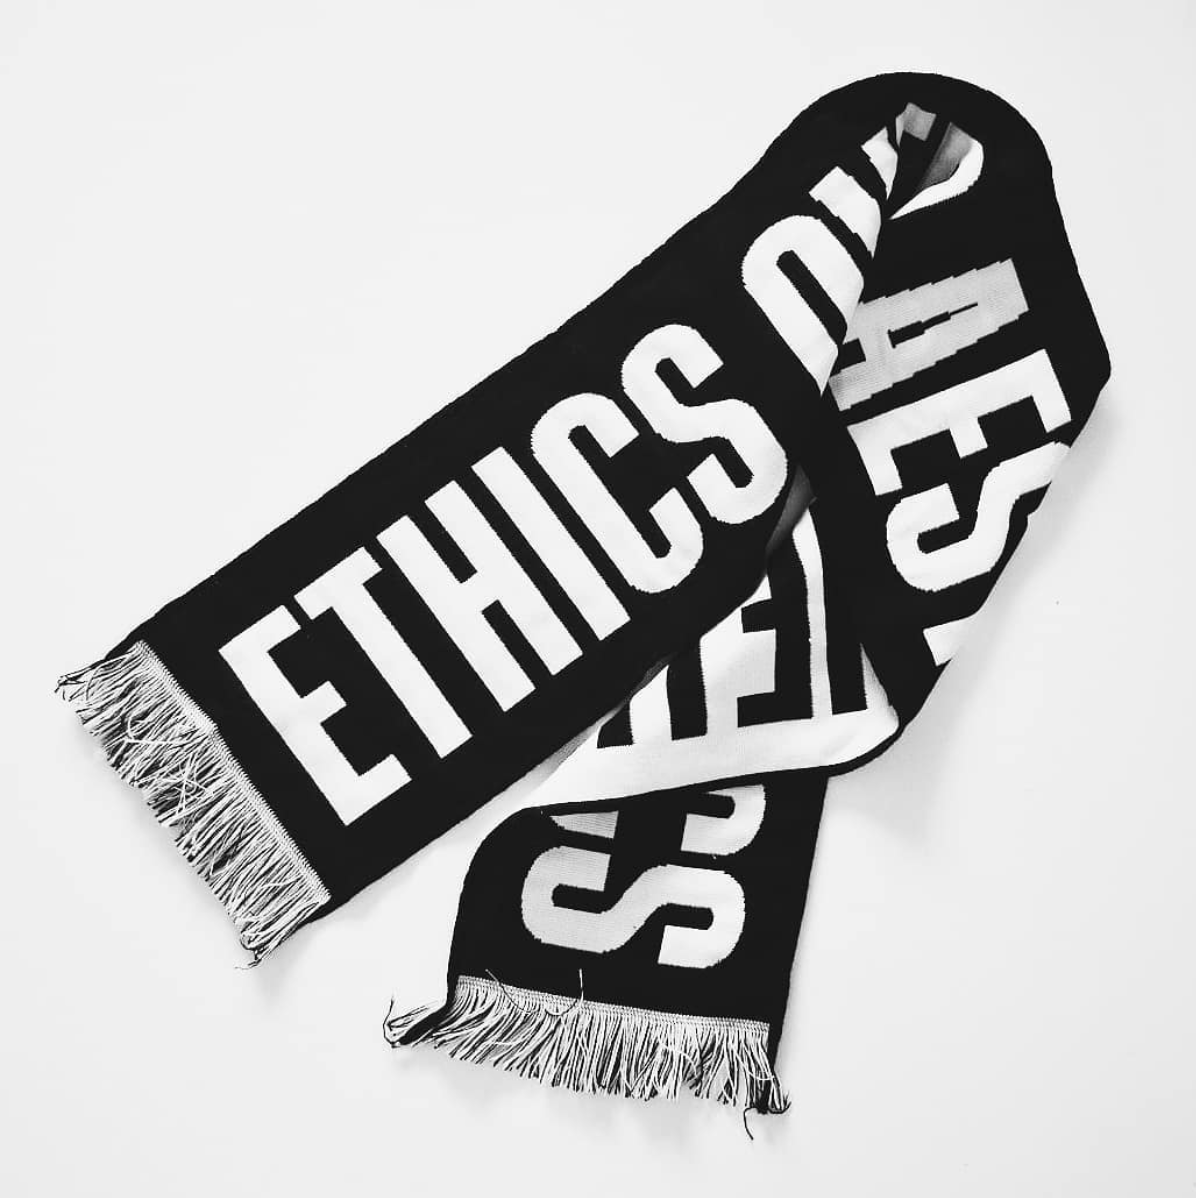 Ethics over aesthetics